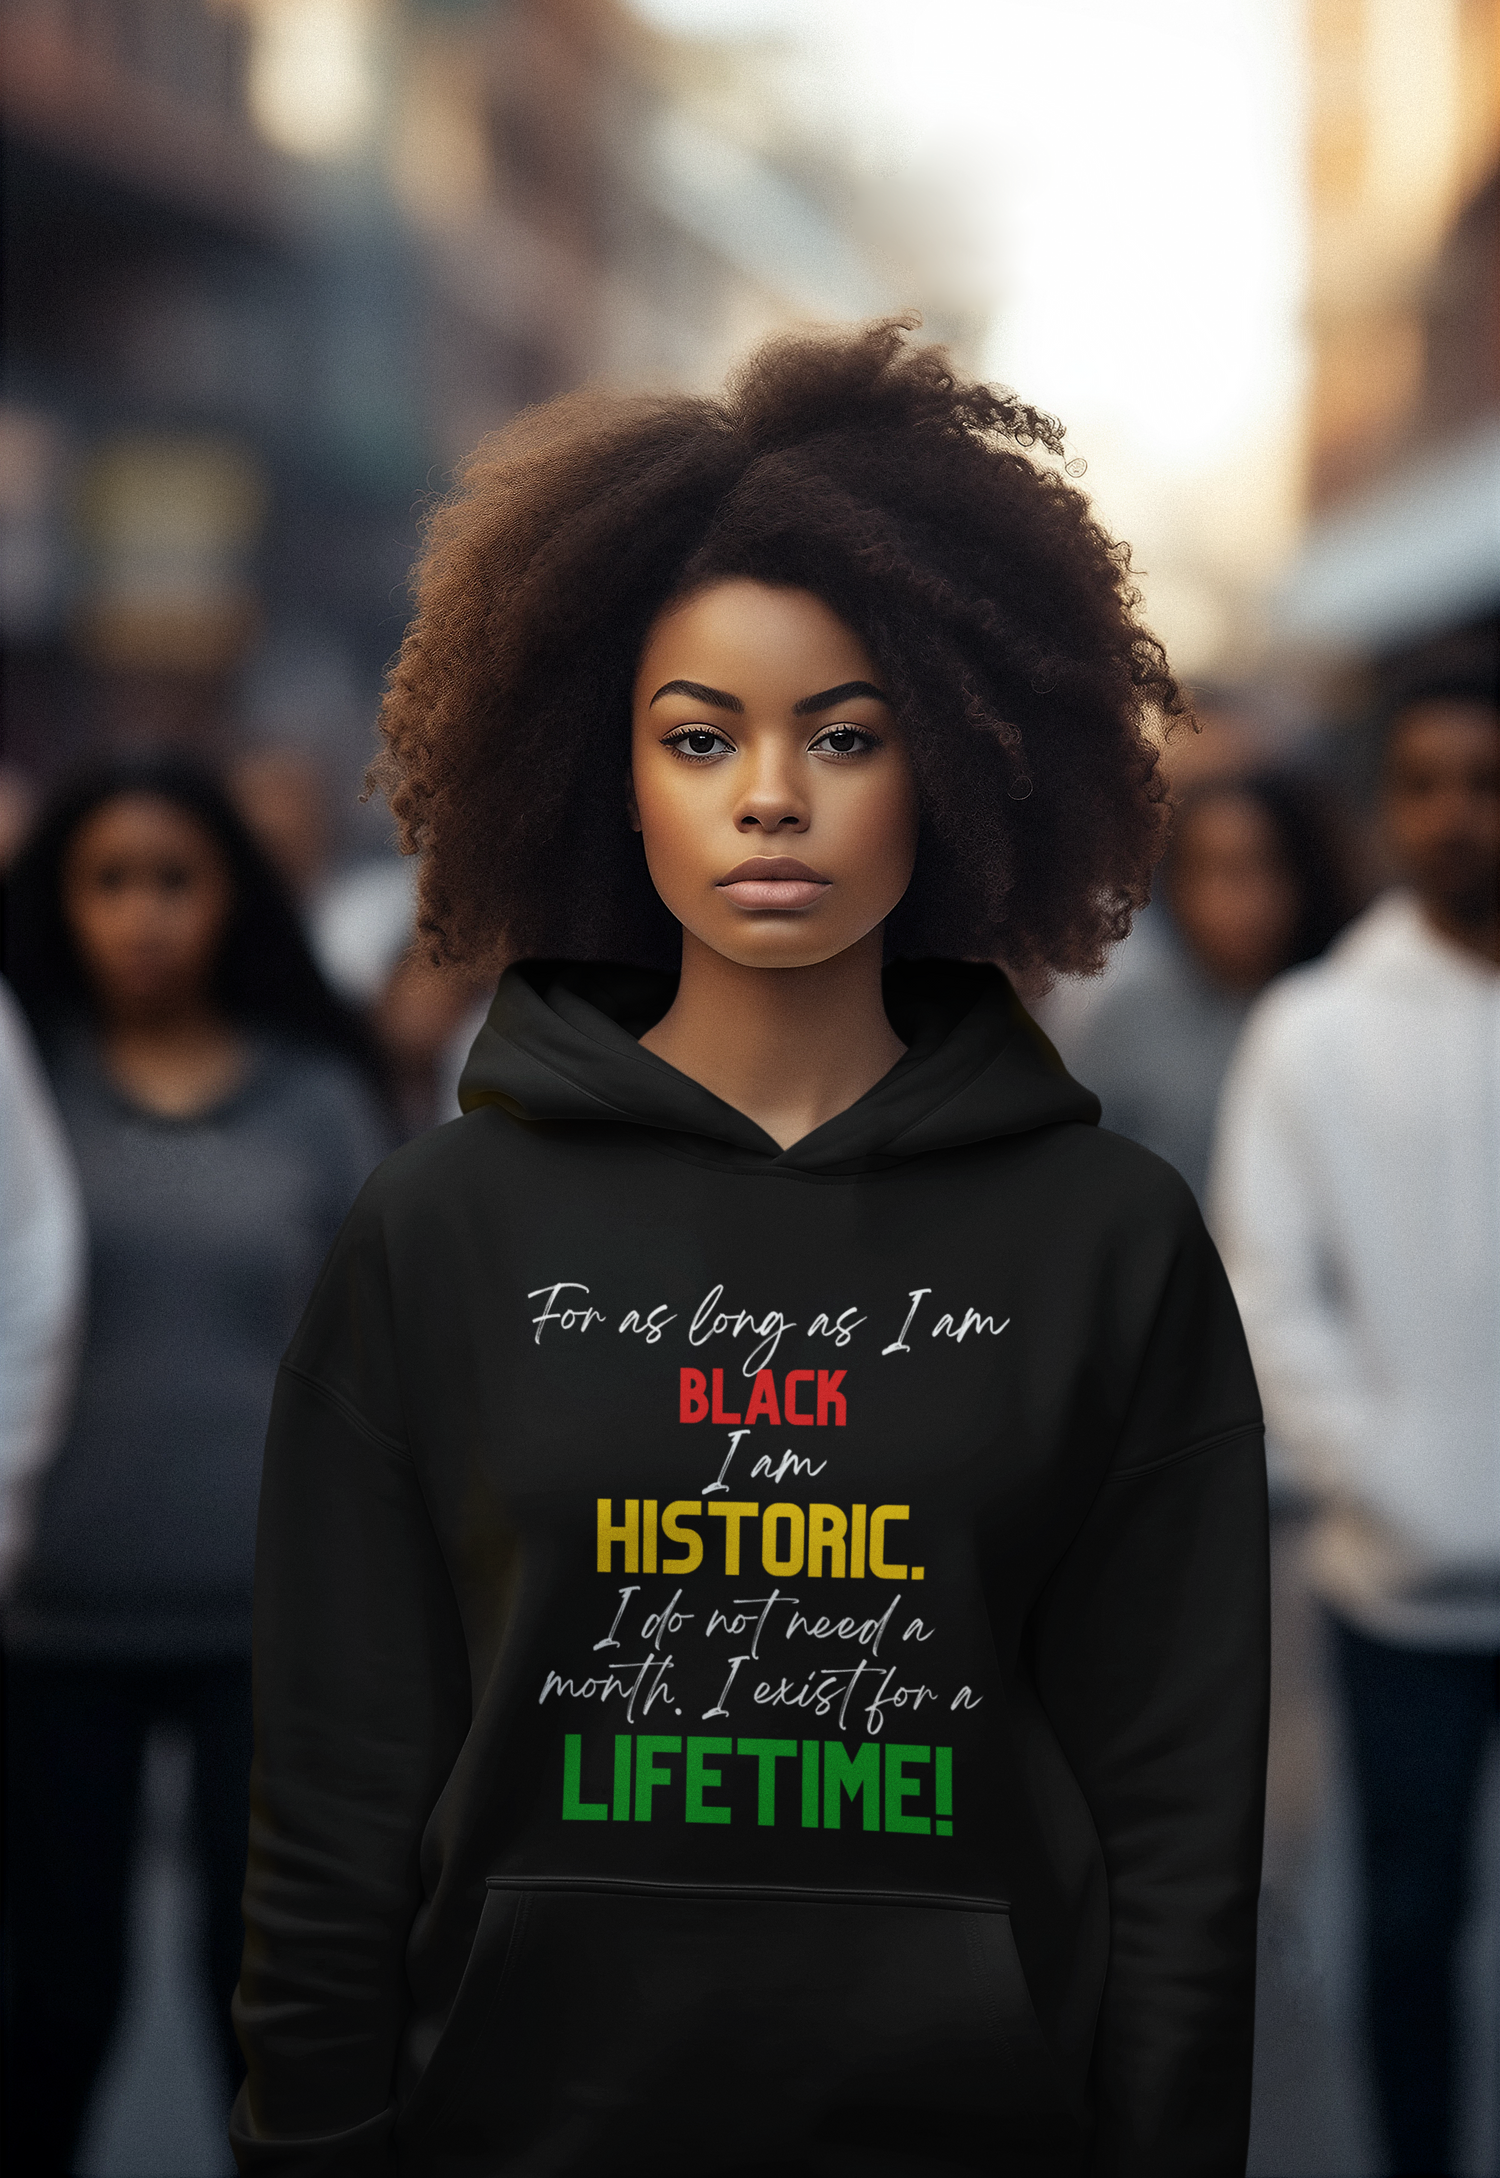 Black History